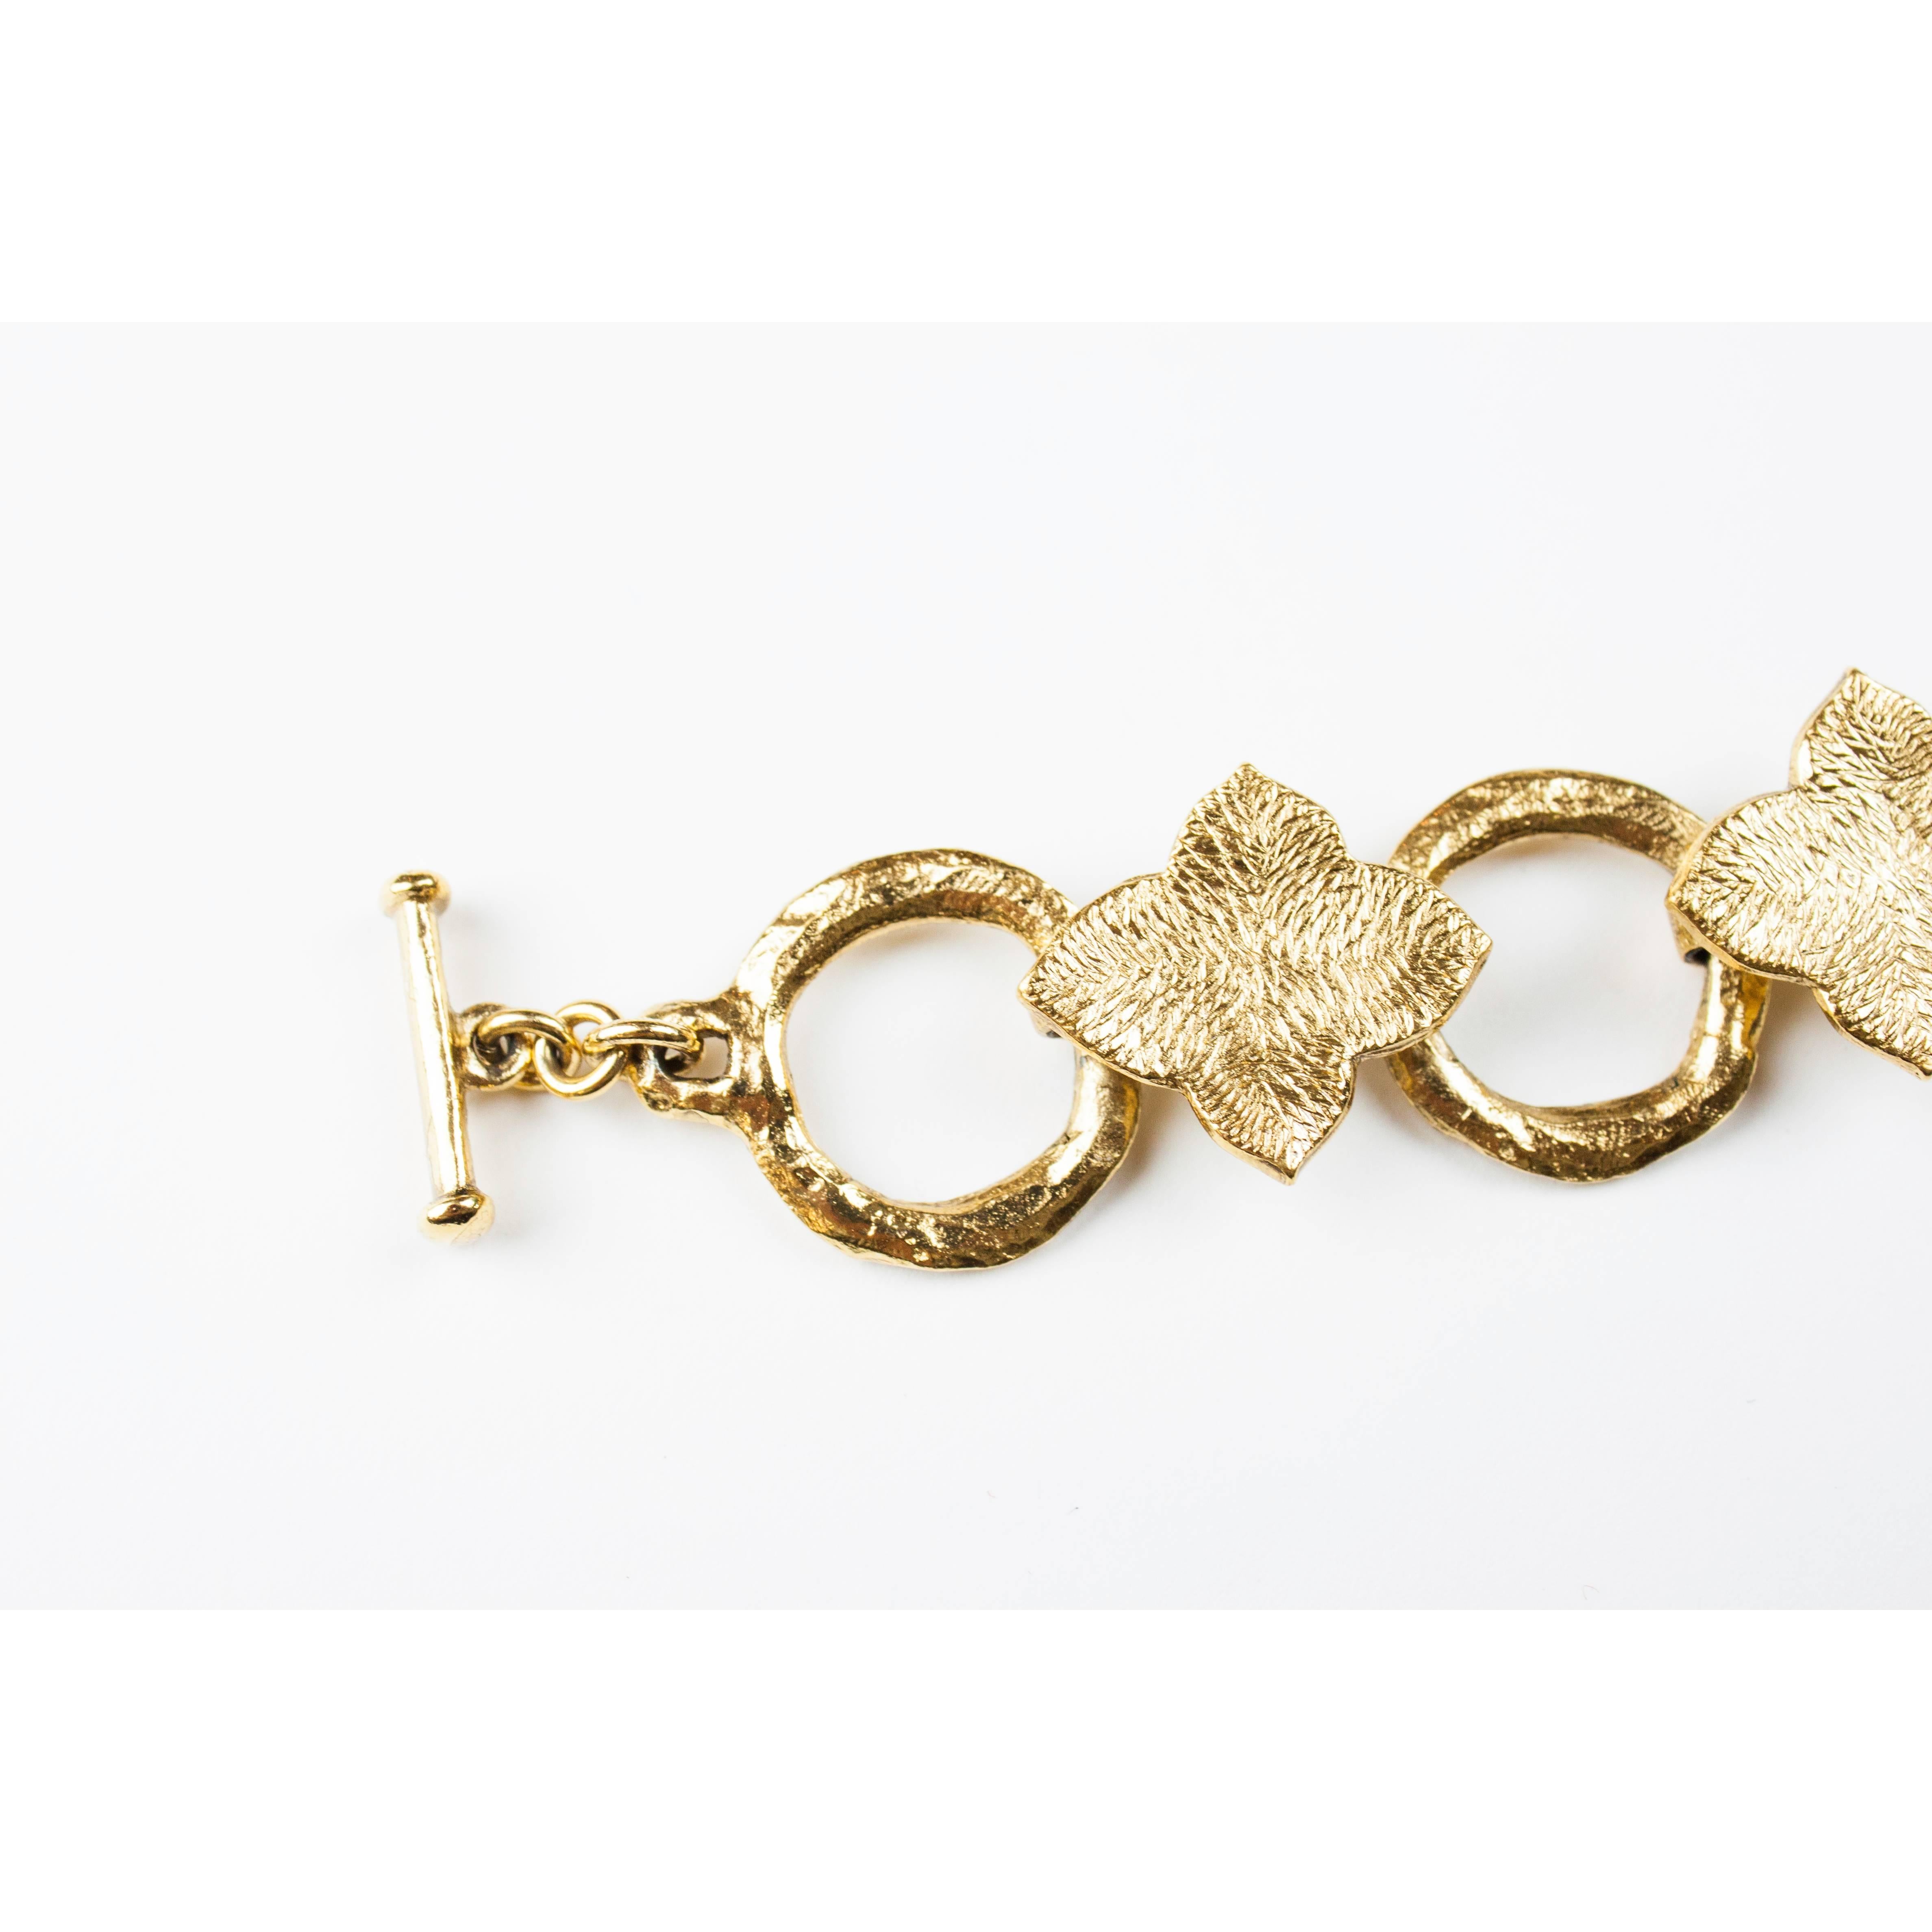 Yves Saint Laurent  lucky charm gold tone chain link belt. Circa 1970   1